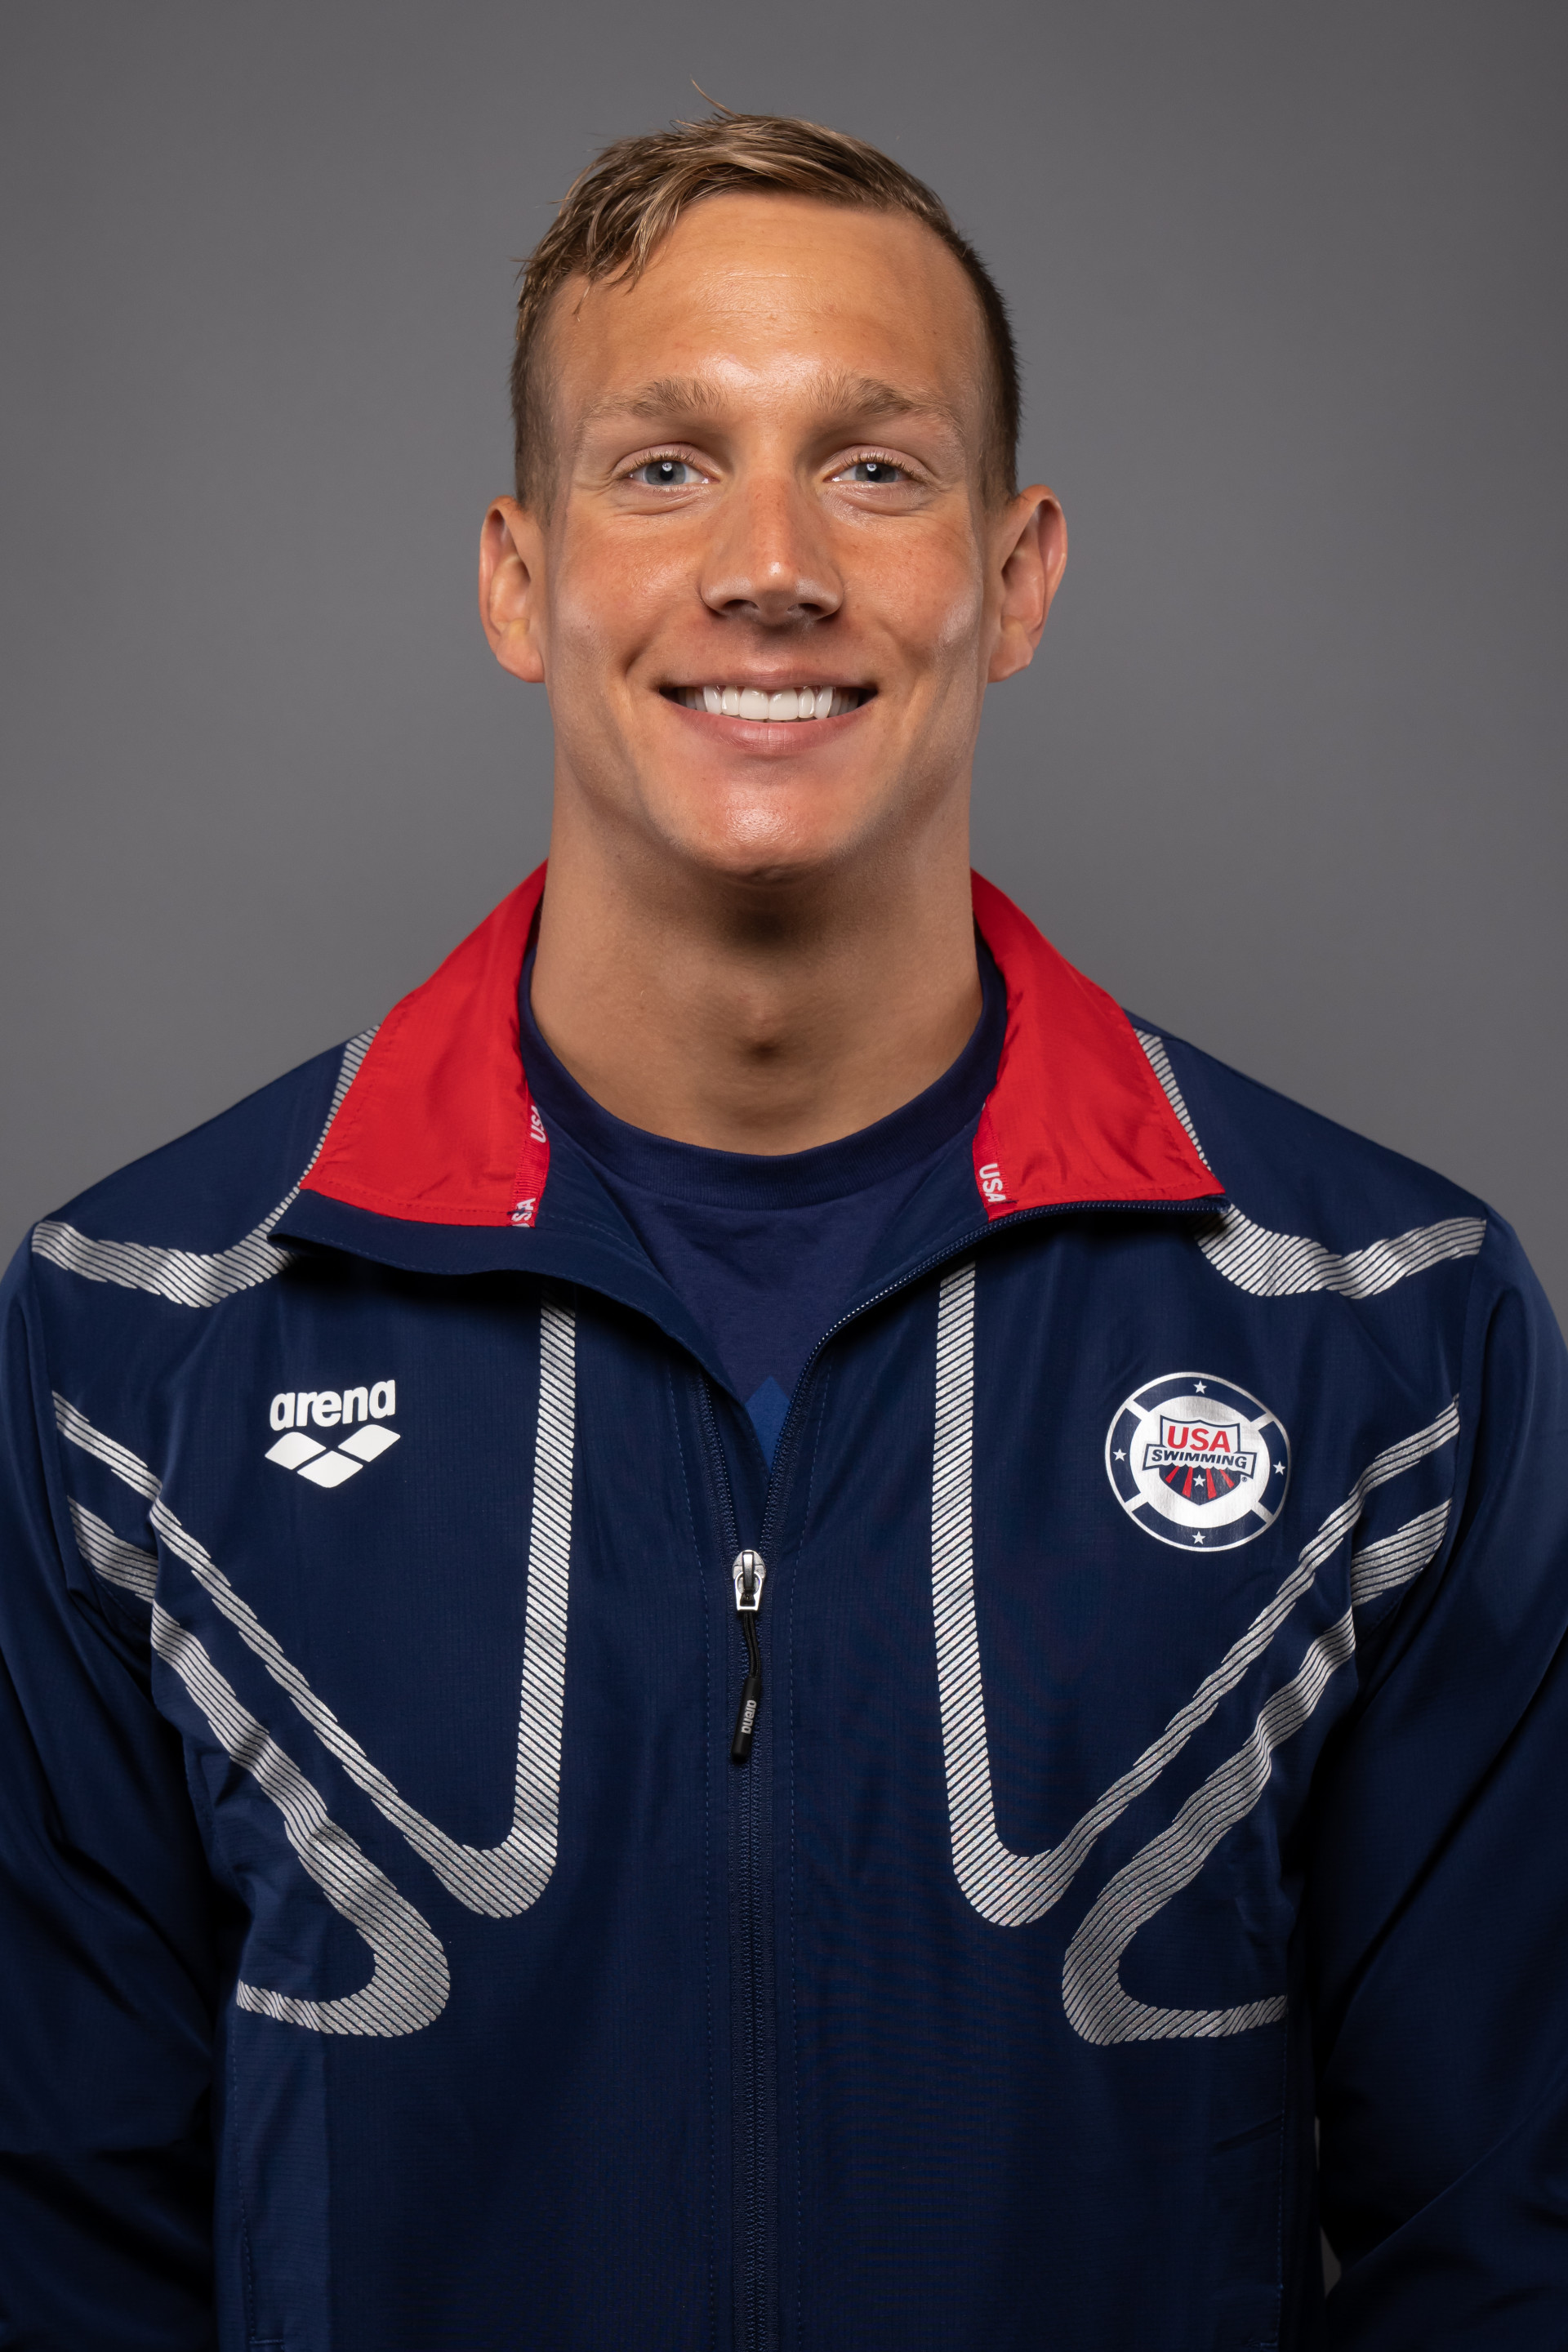 USA Swimming Photo